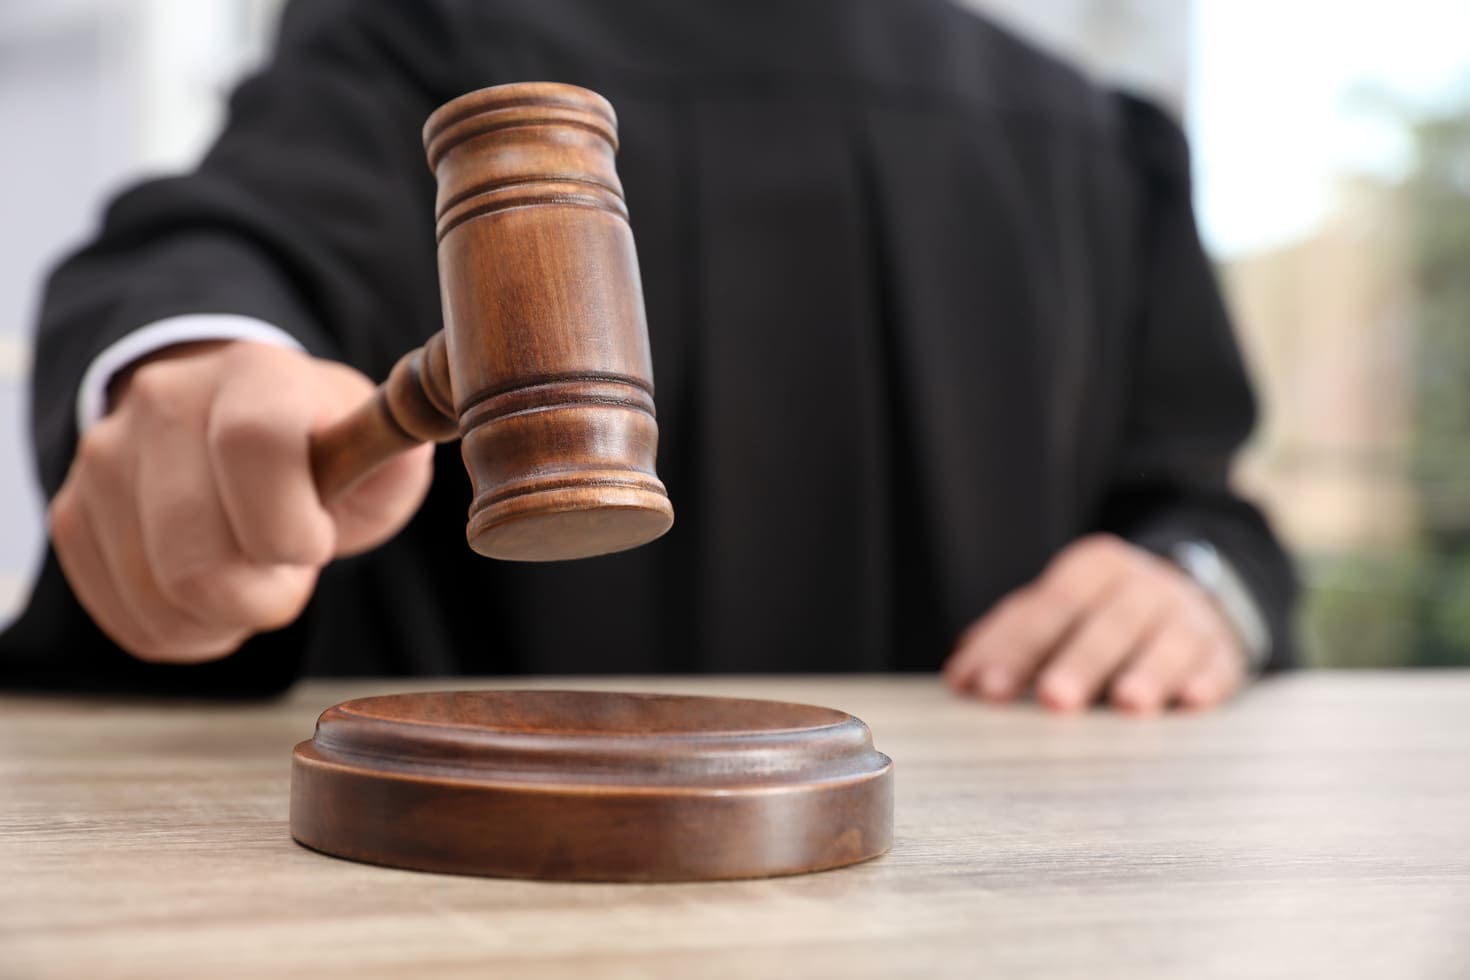 Federal Judge dismisses lawsuit against Binance